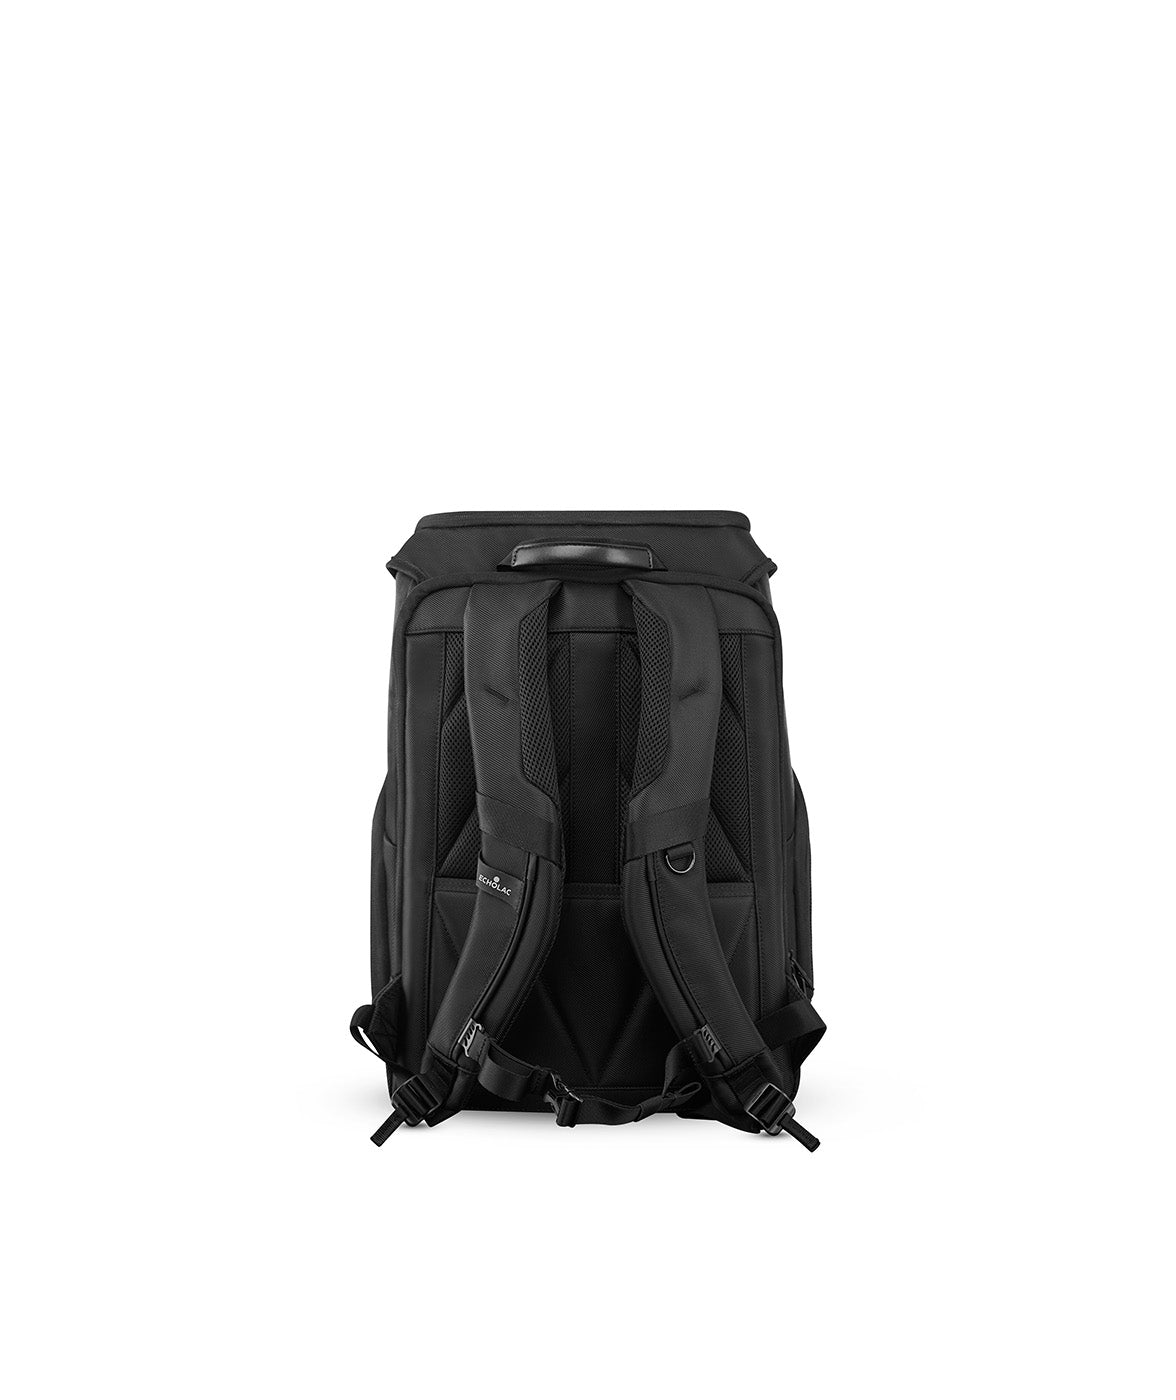 Matrix Backpack